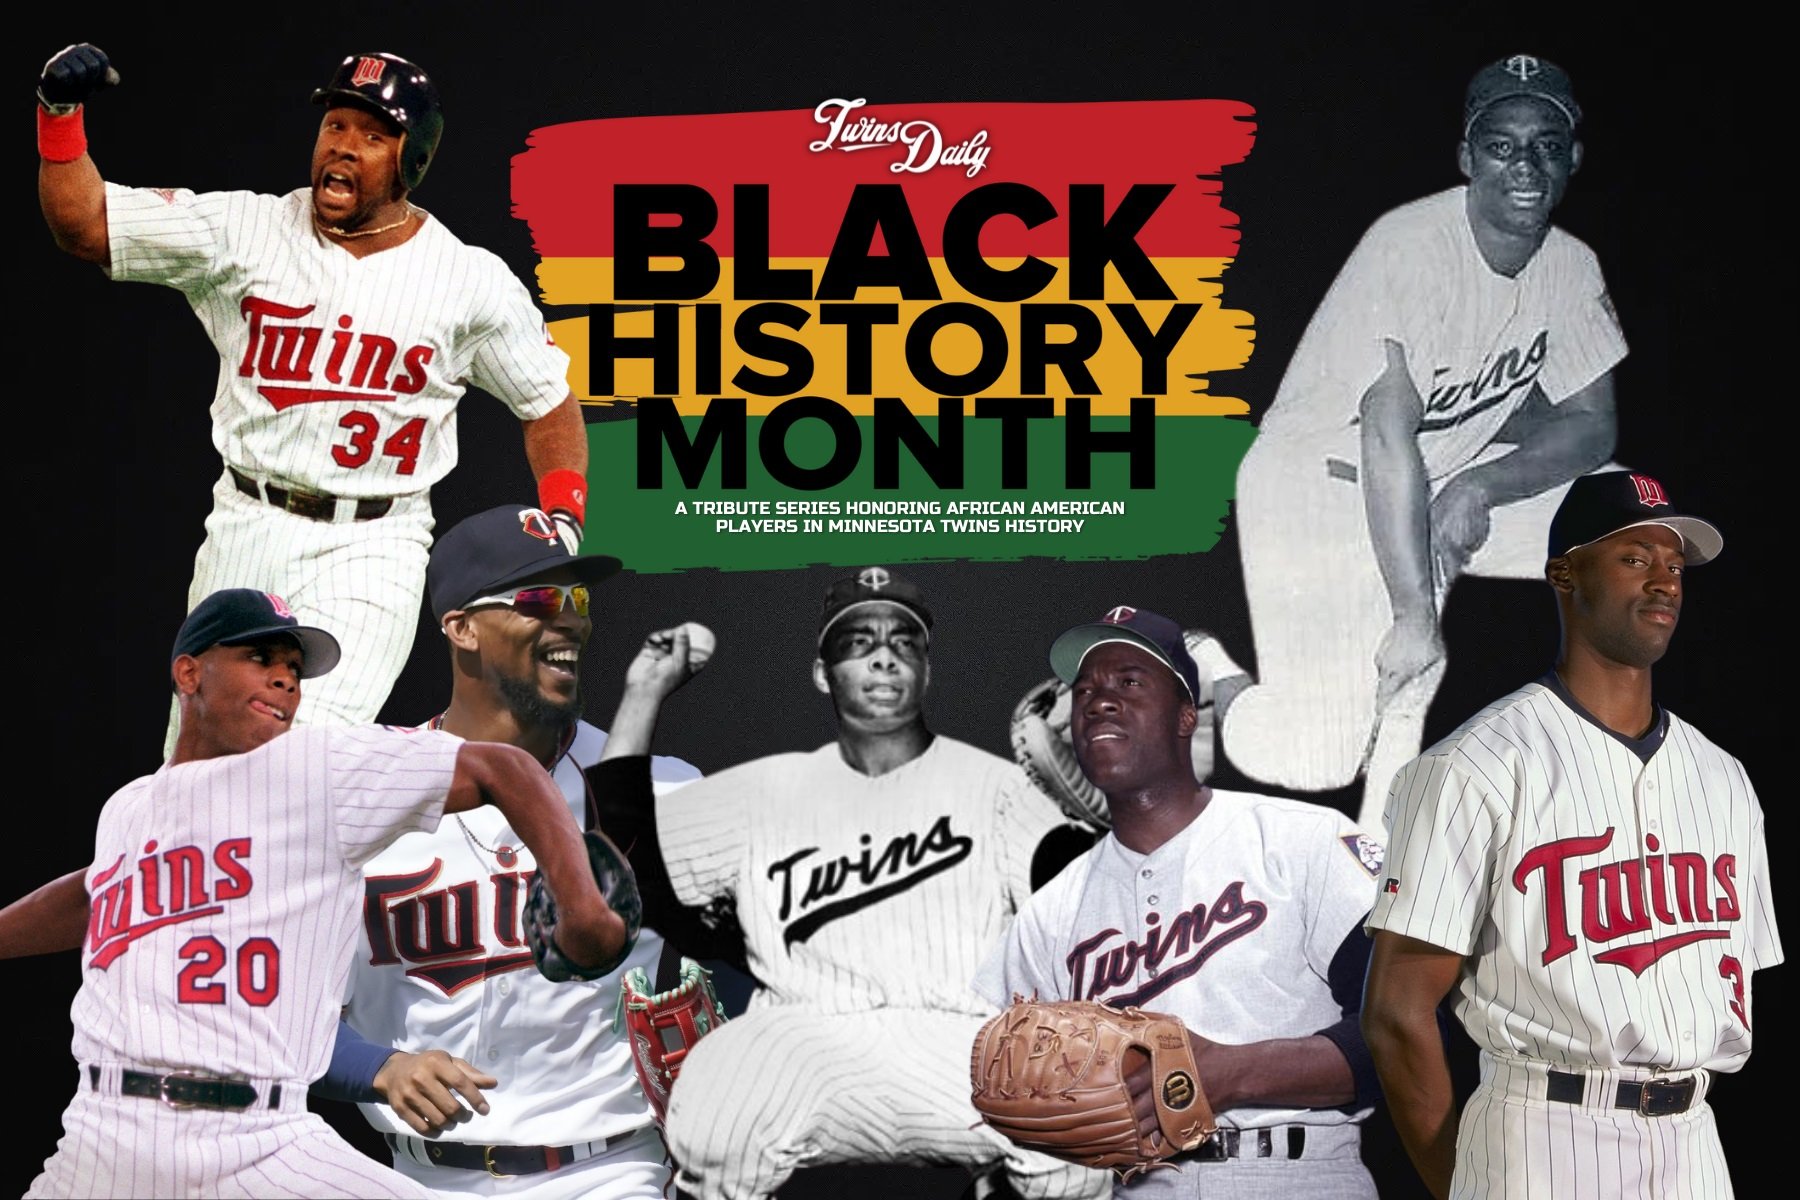 The history of black baseball in Minnesota